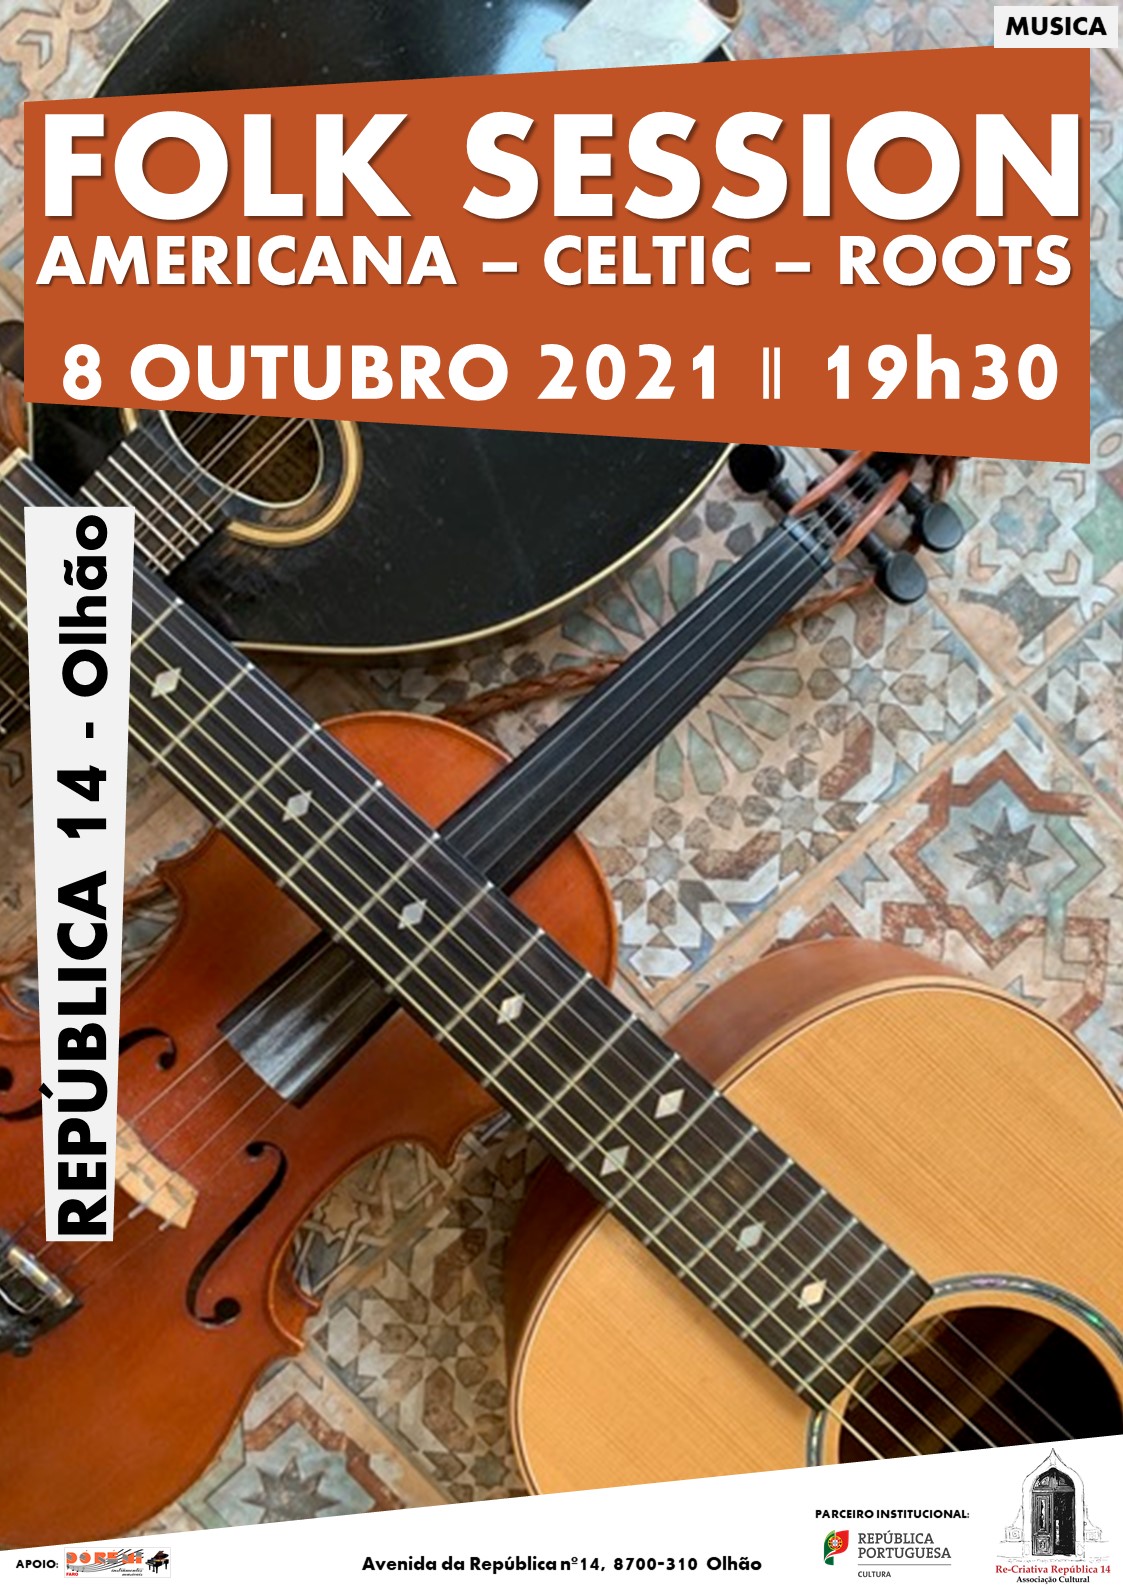 FOLK SESSION - Americana, Celtic, Roots